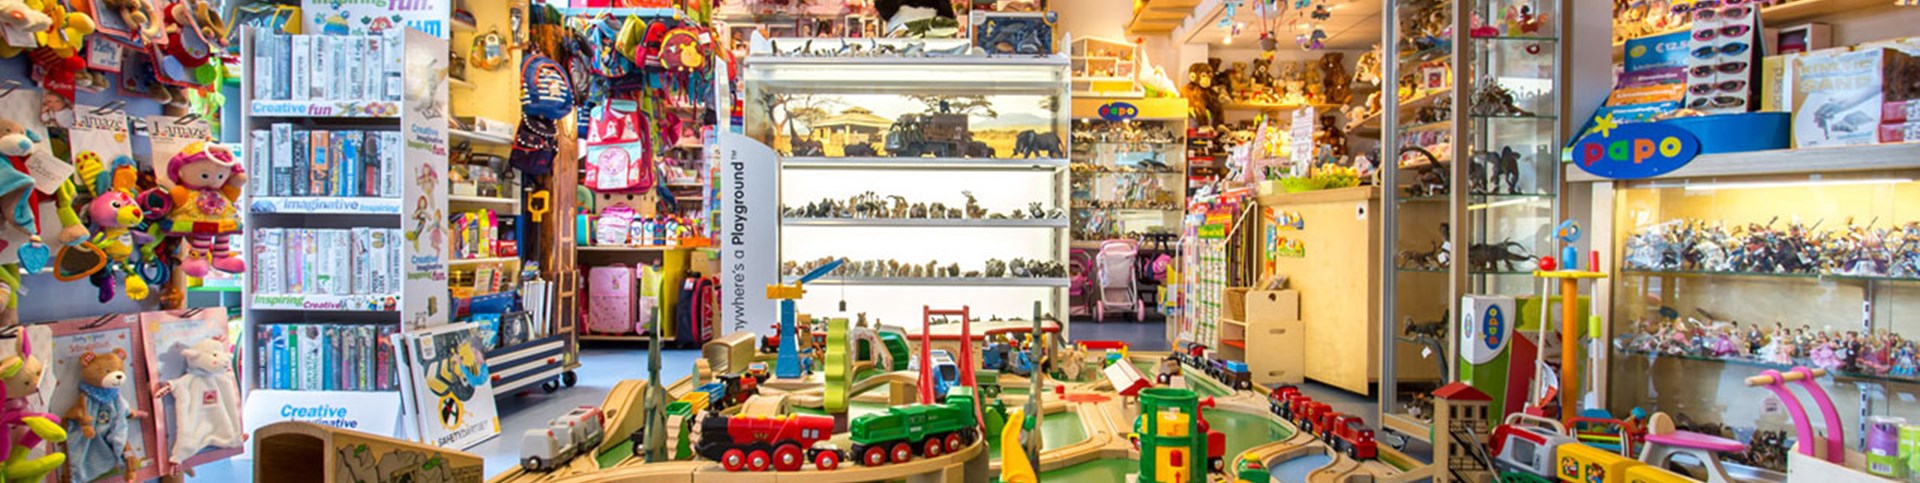 gelderlandplein cedille speelgoedwinkel